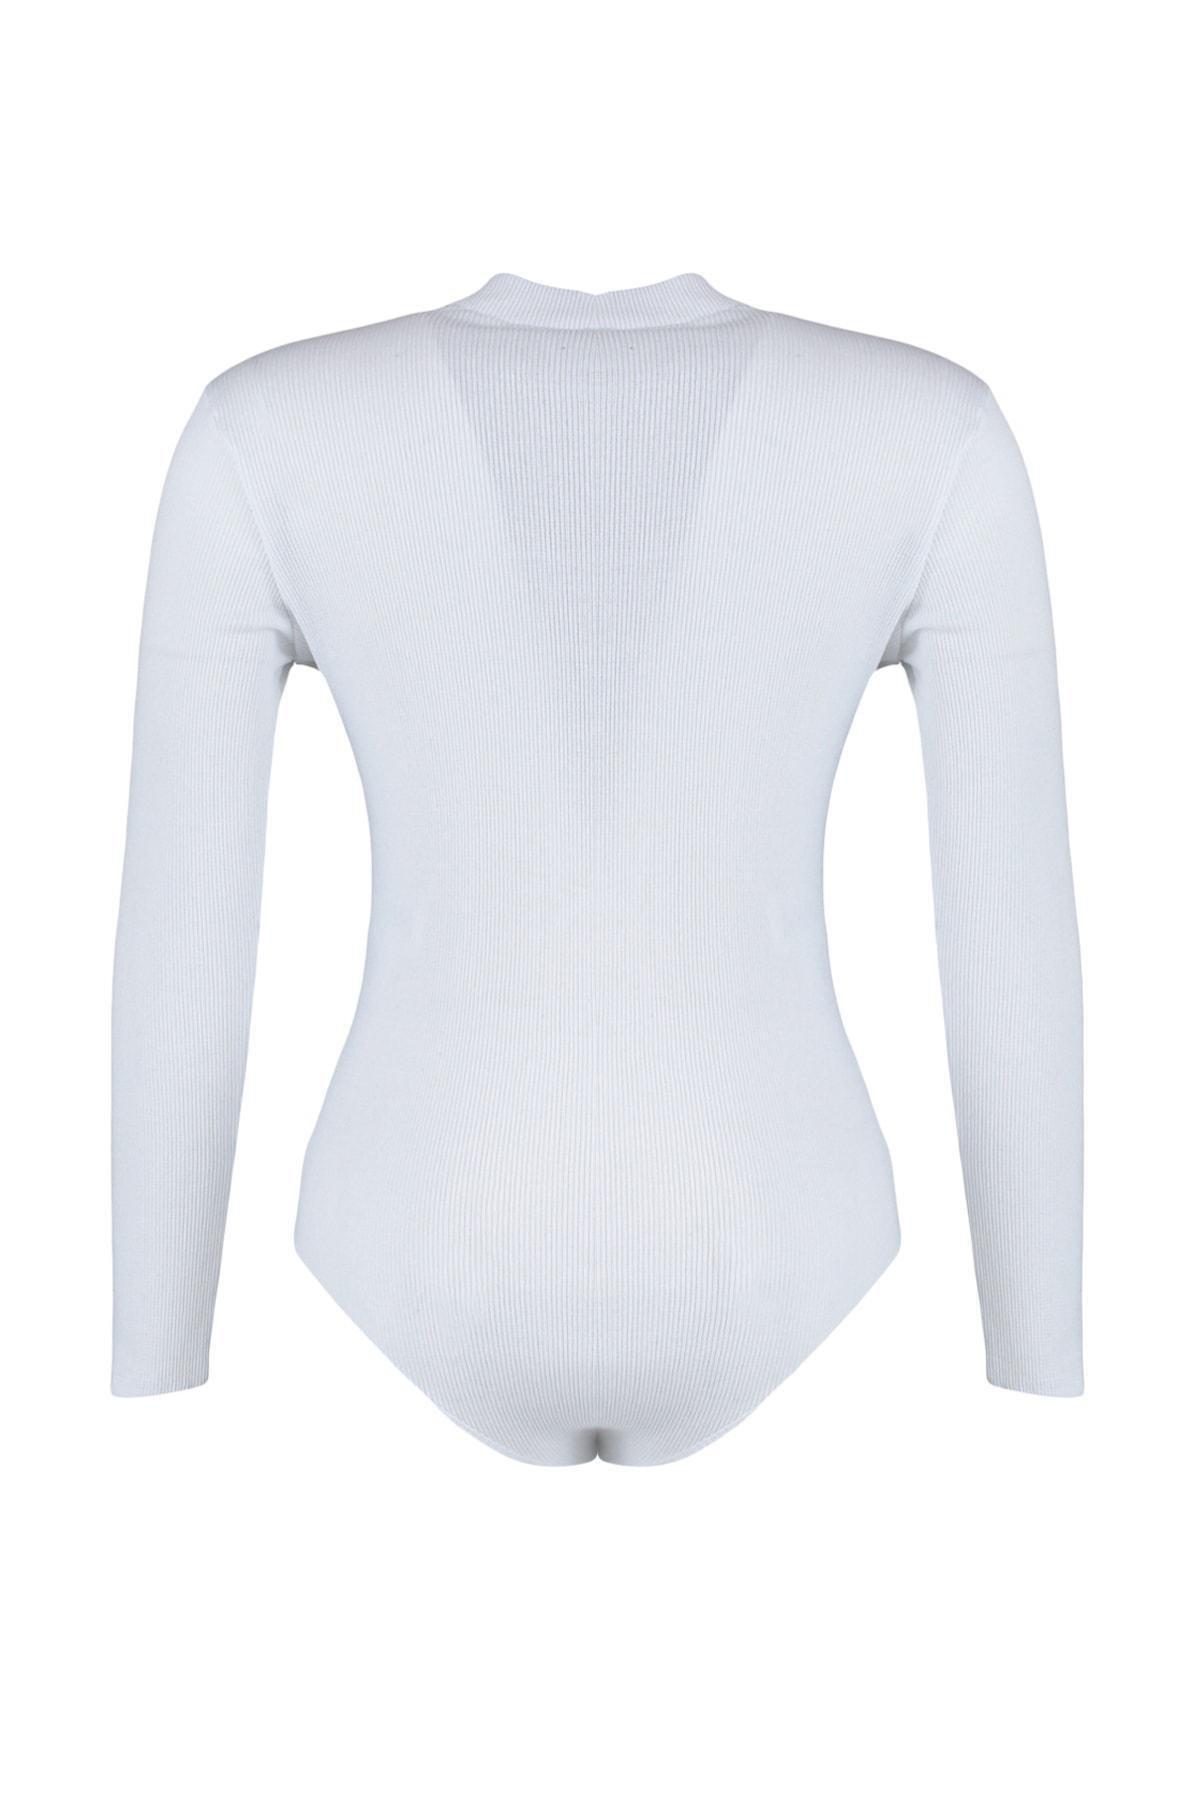 Trendyol - White Crew Neck Plus Size Bodysuit